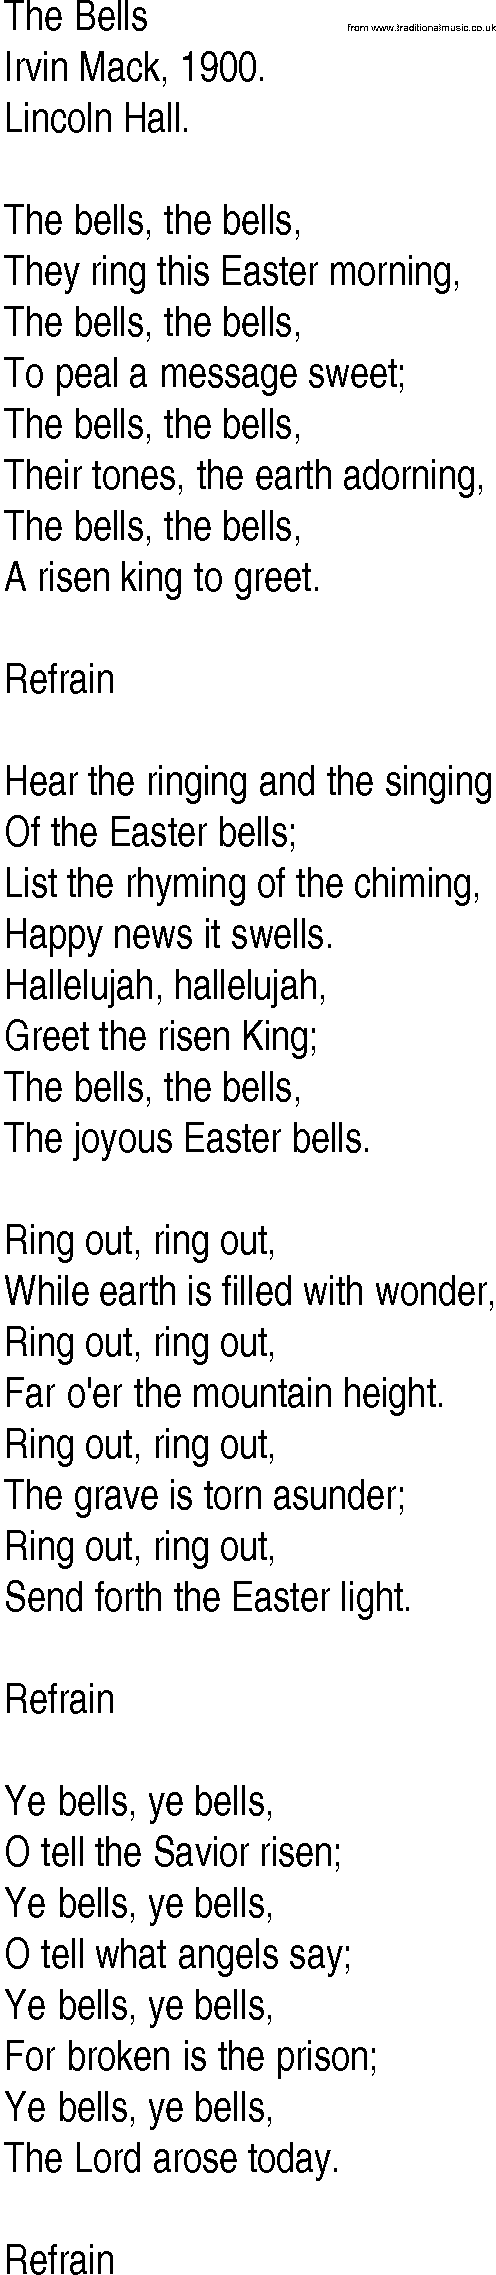 Hymn and Gospel Song: The Bells by Irvin Mack lyrics